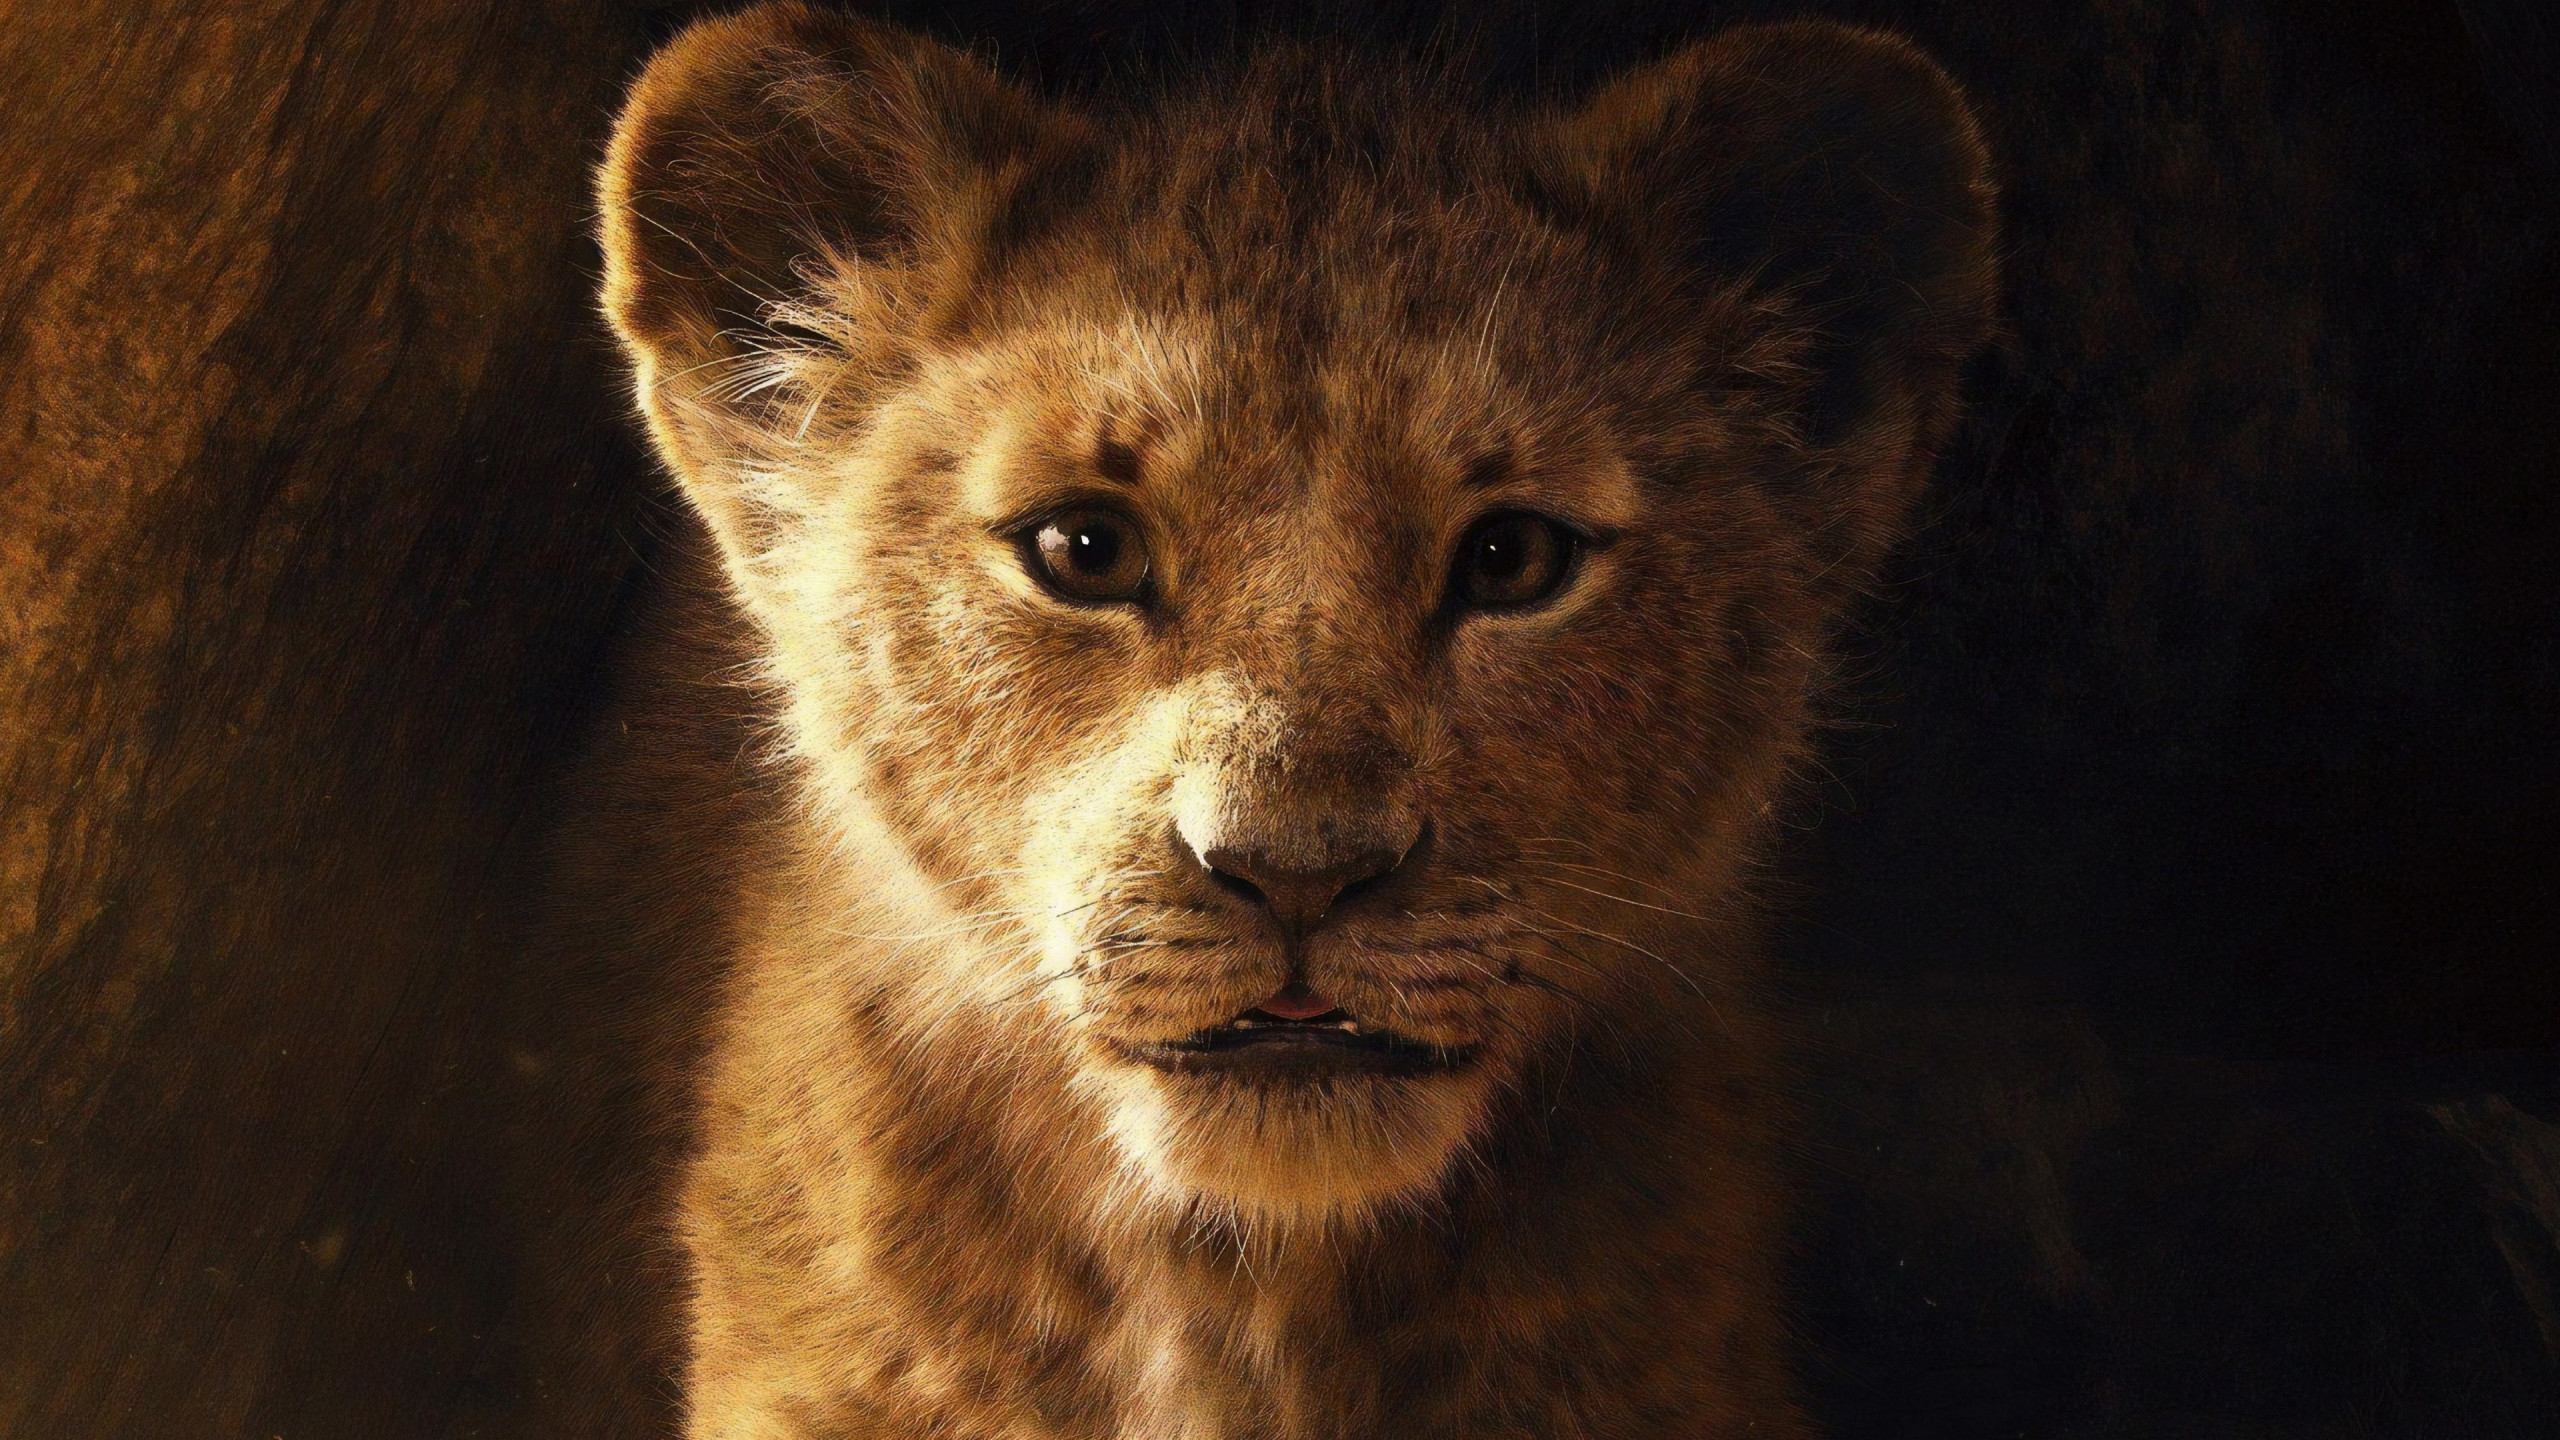 The Lion King 2019 wallpaper 2560x1440